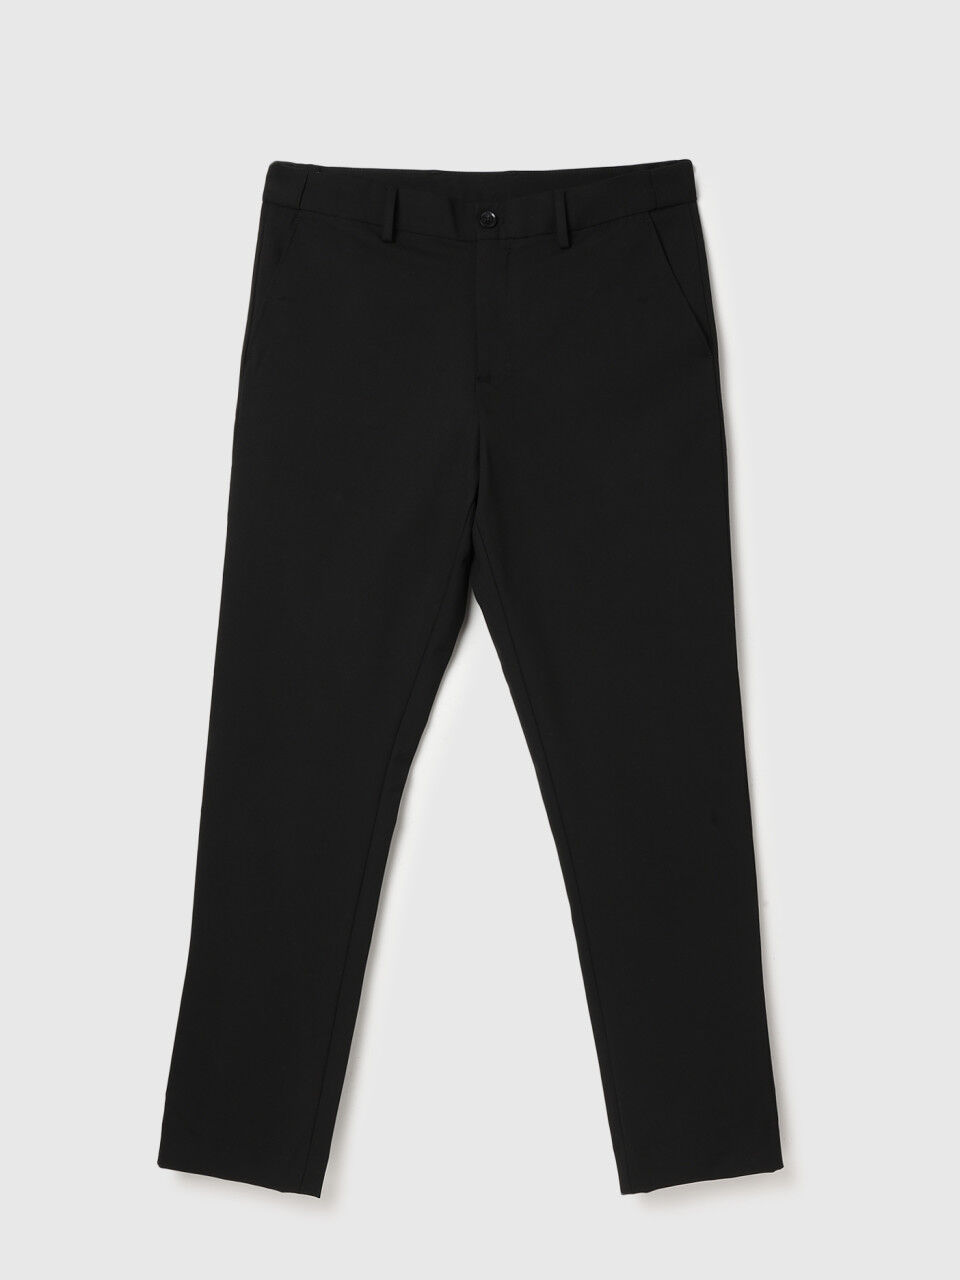 United Colors of Benetton Man Men Mens Men's Size 50 Size Cropped Trousers  Pants | eBay